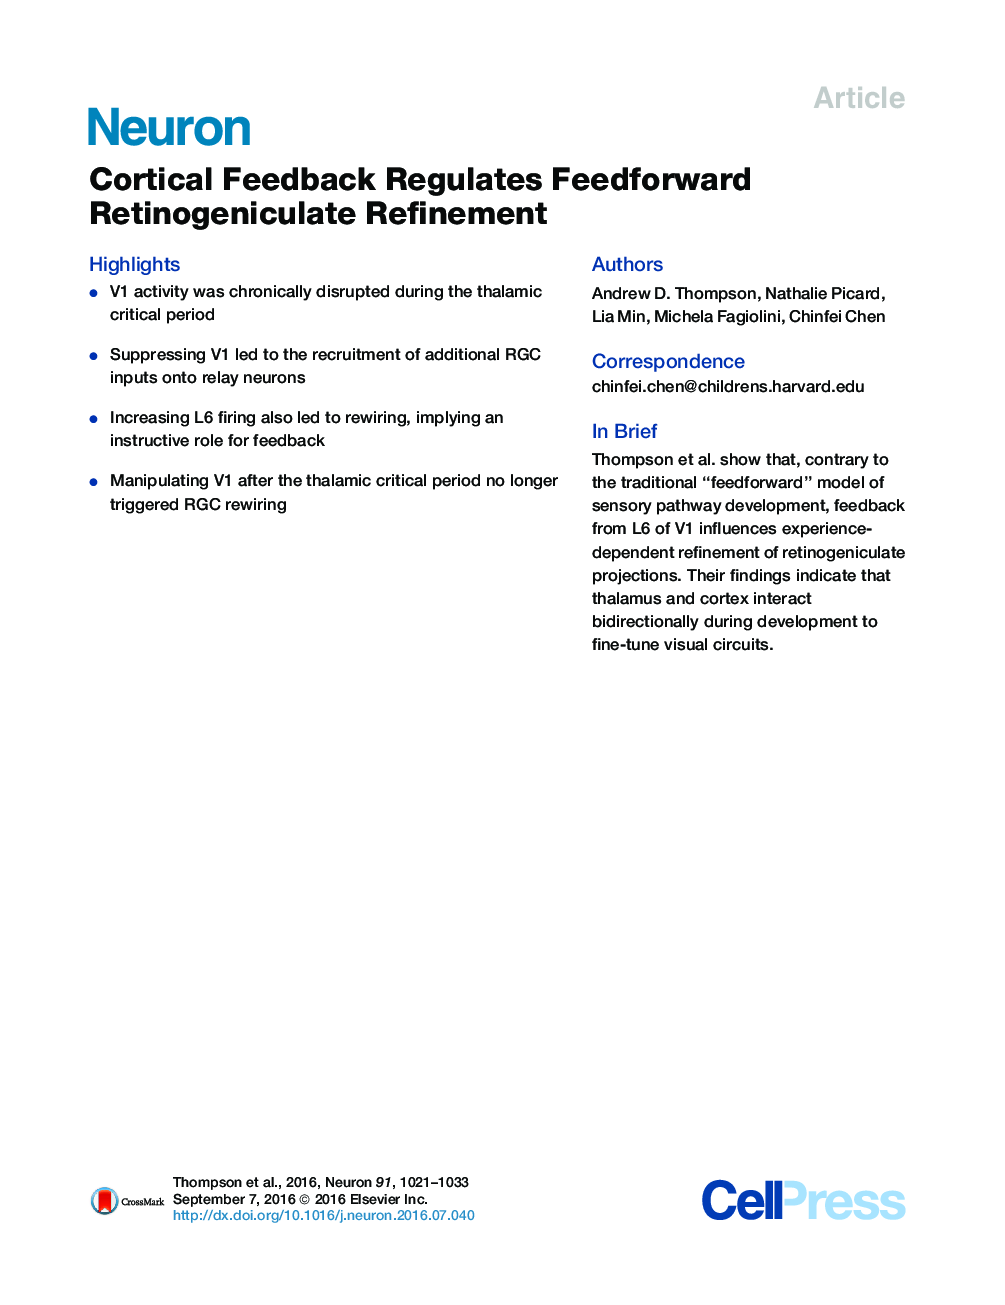 Cortical Feedback Regulates Feedforward Retinogeniculate Refinement